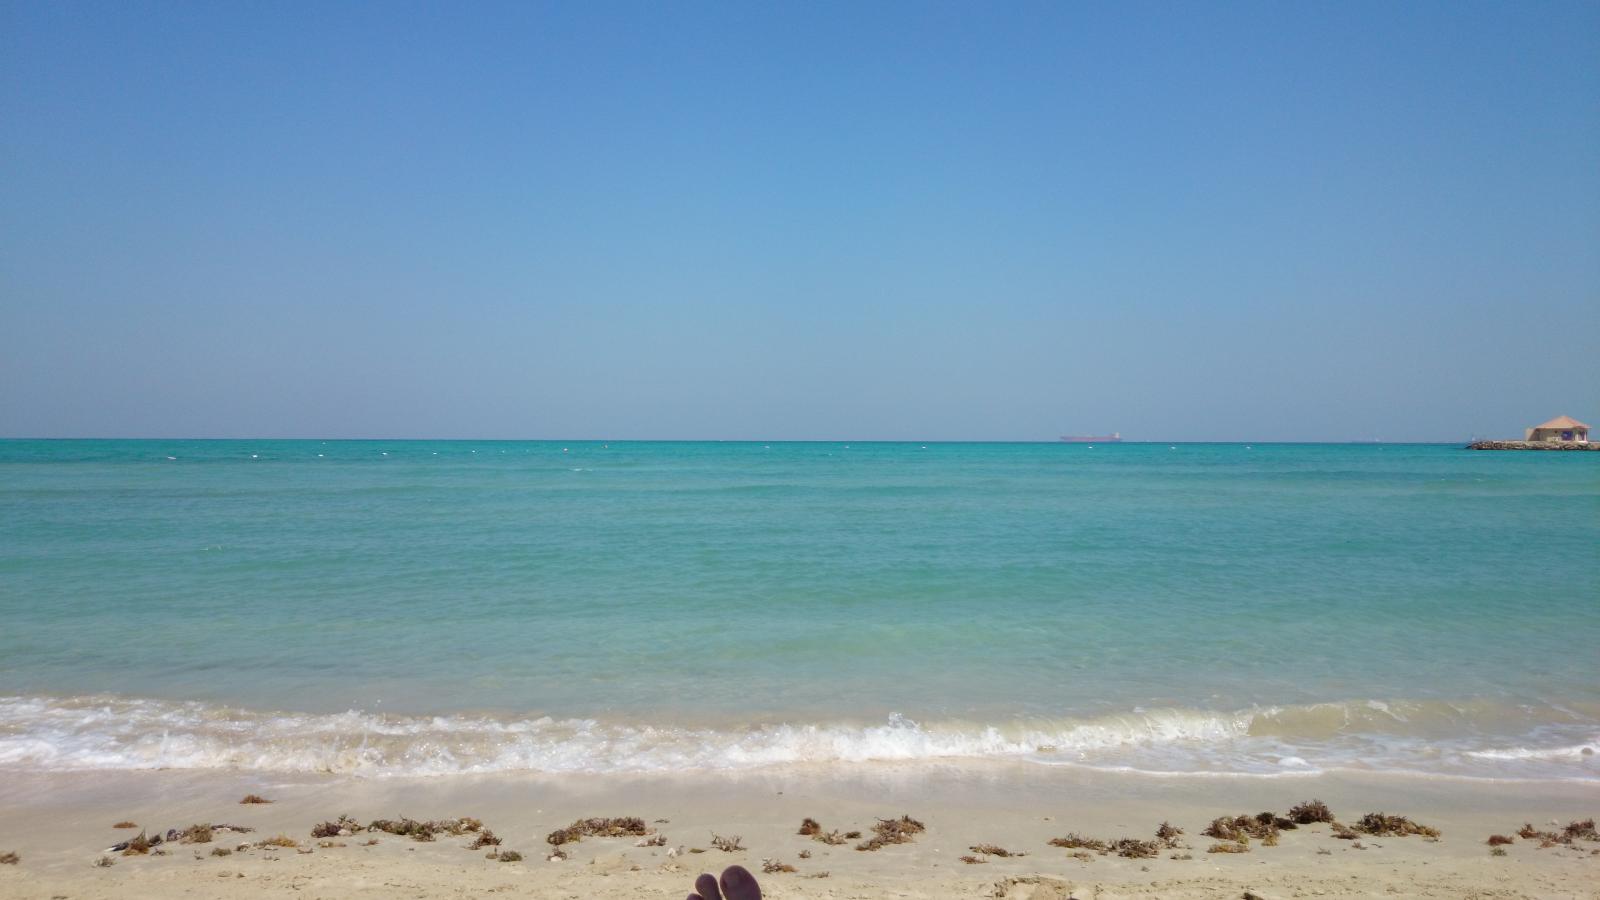 10. Al Dhafra Beach